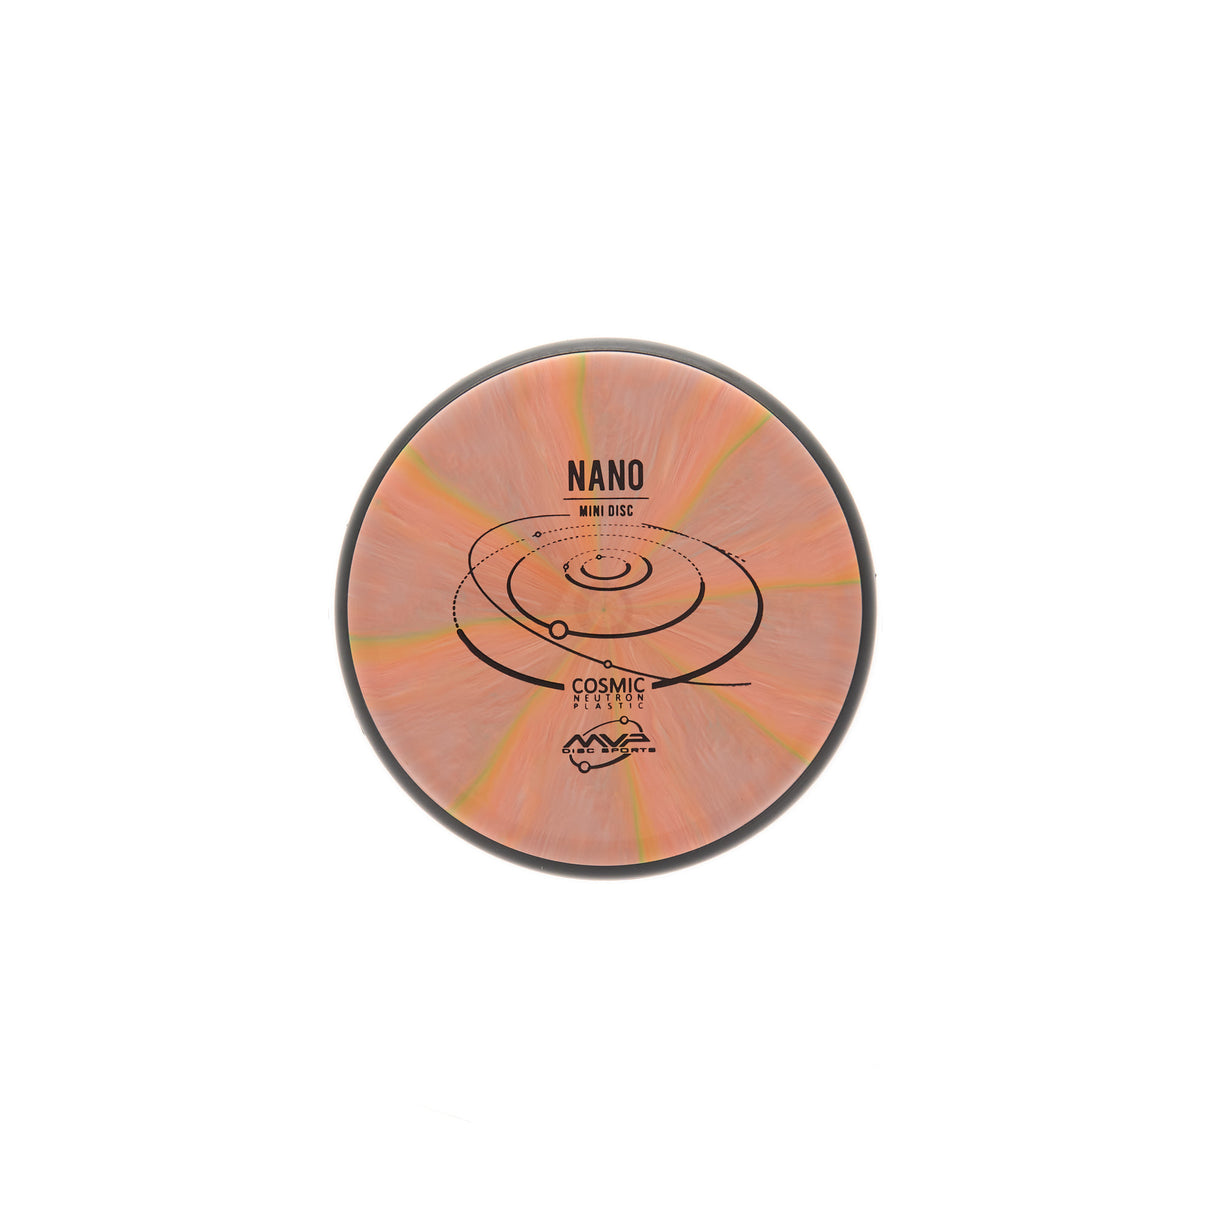 MVP Nano - Cosmic Neutron 30g | Style 0053